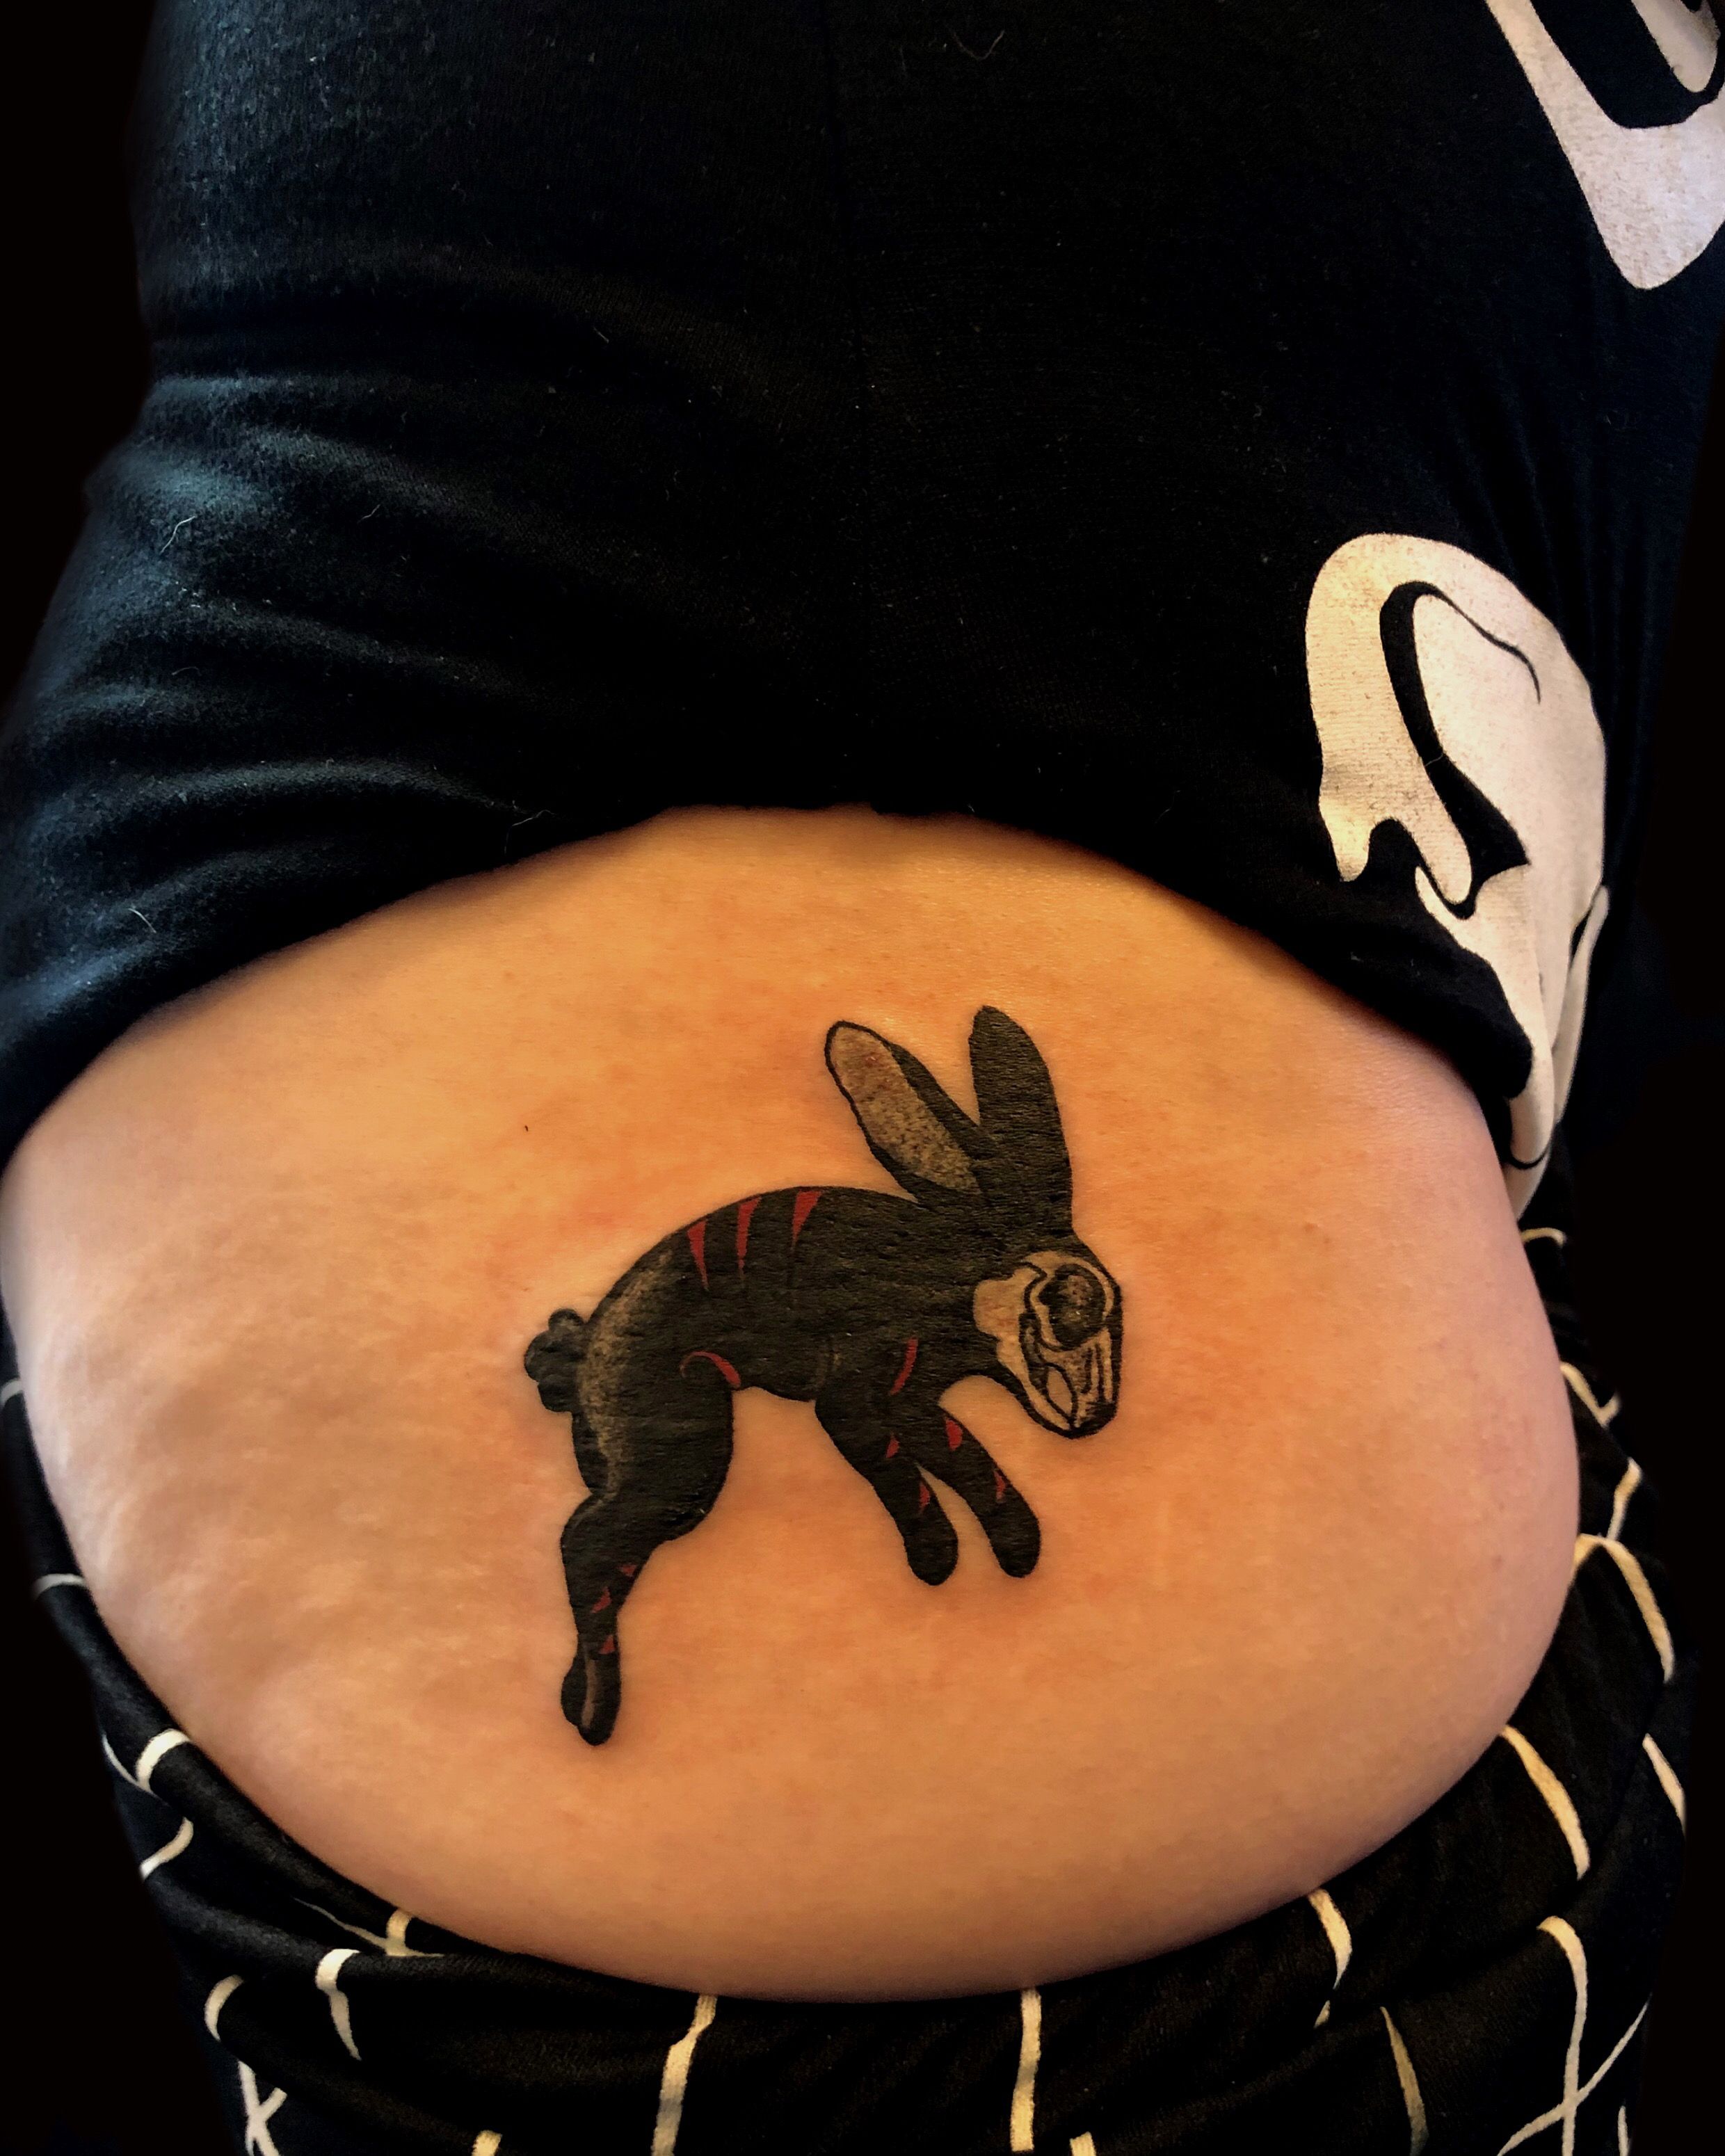 Watership down bunnies tattoo by WoolNoon on DeviantArt